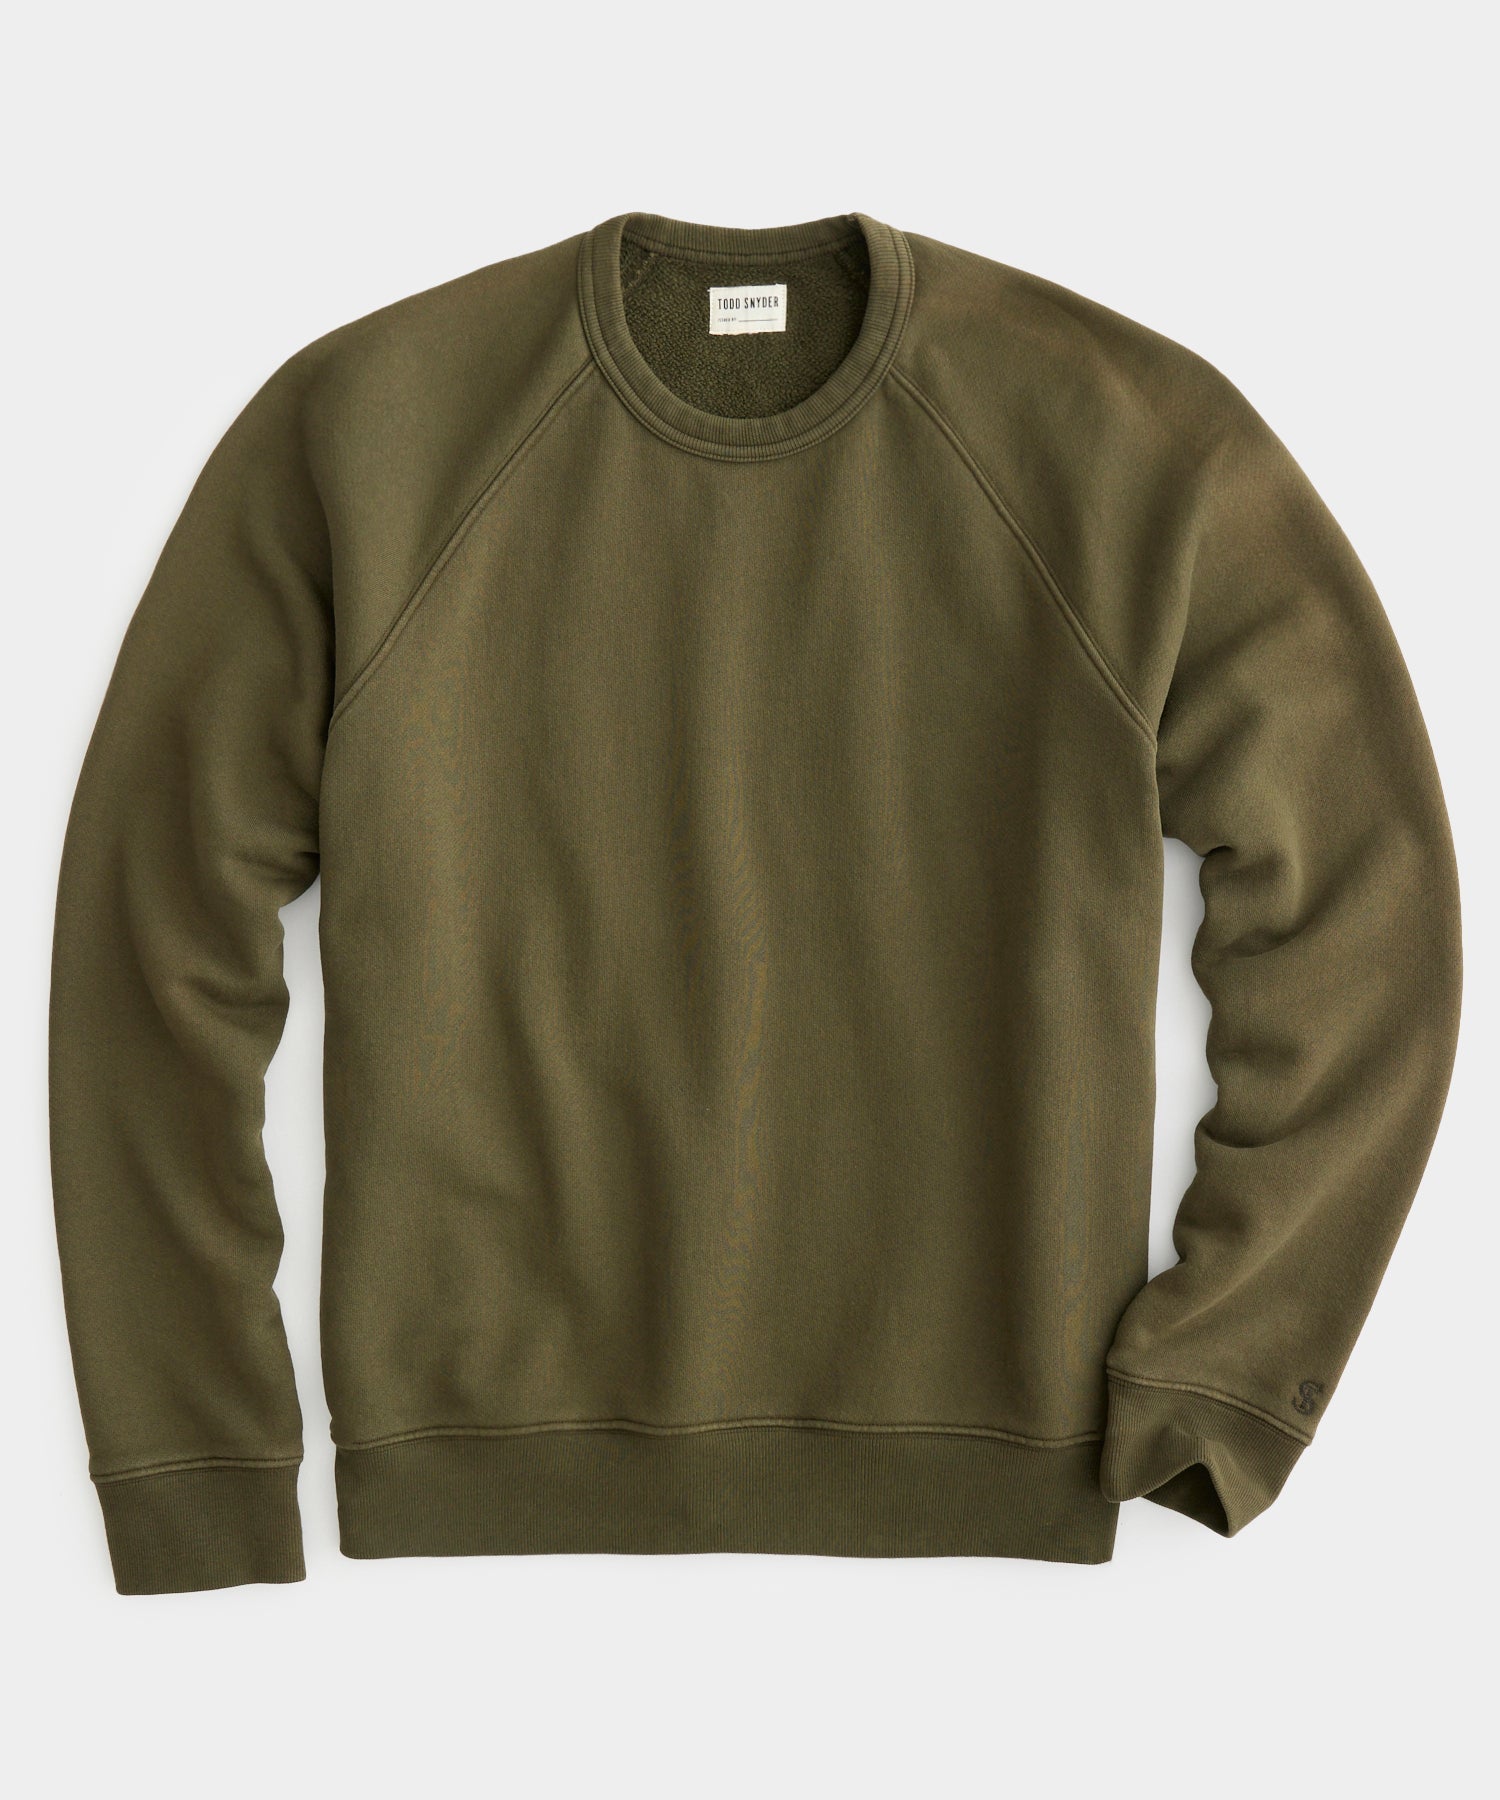 Made in L.A. Fleece Sweatshirt in Snyder Olive